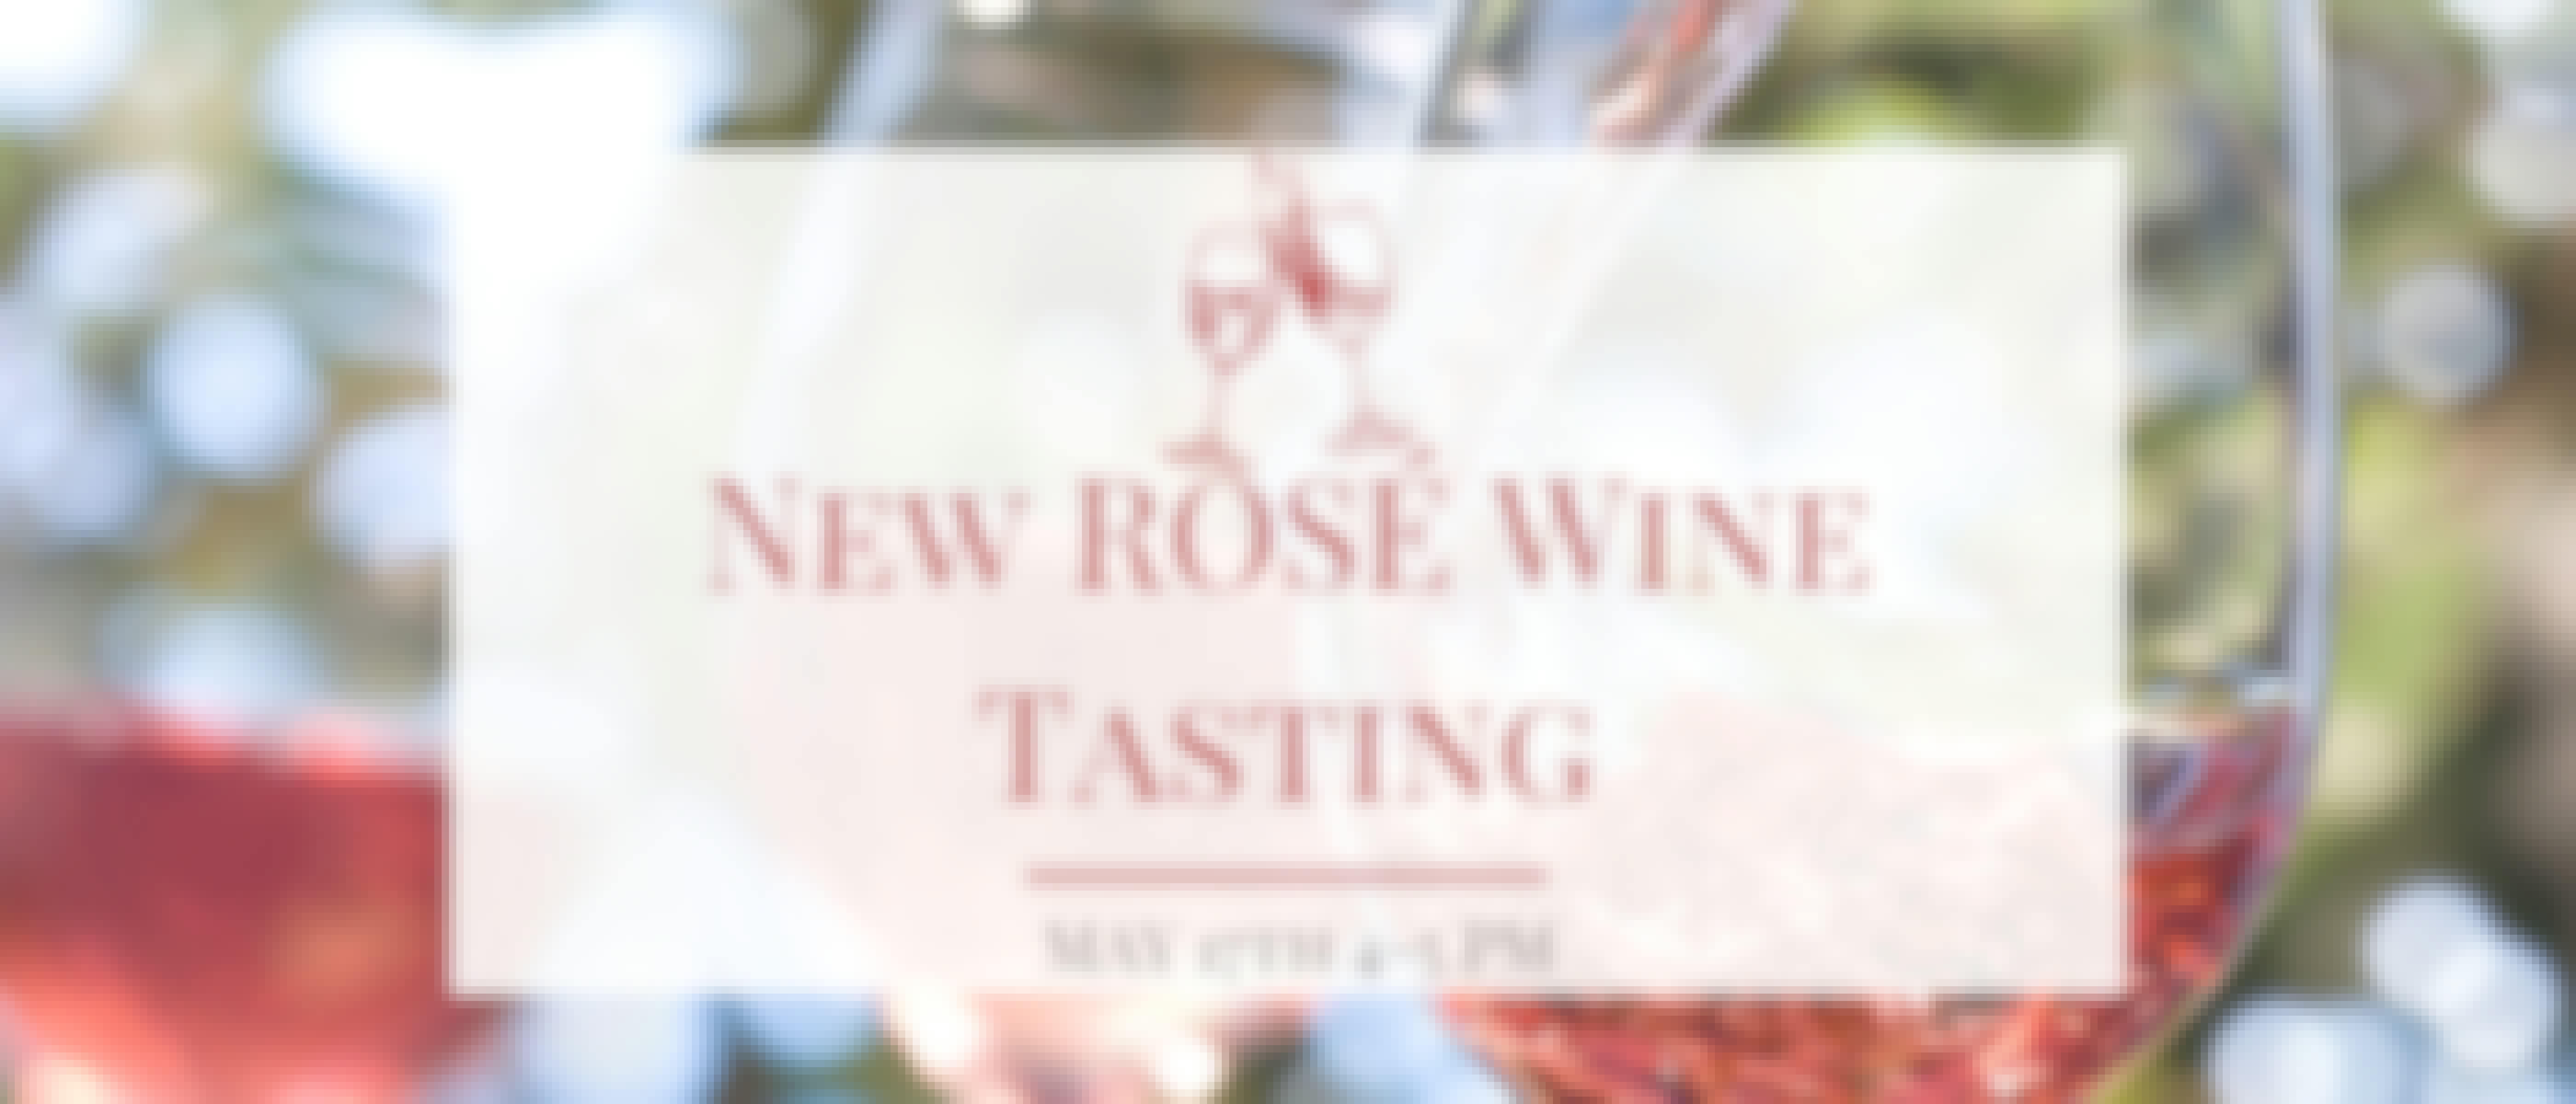 New Rosé Wine Tasting